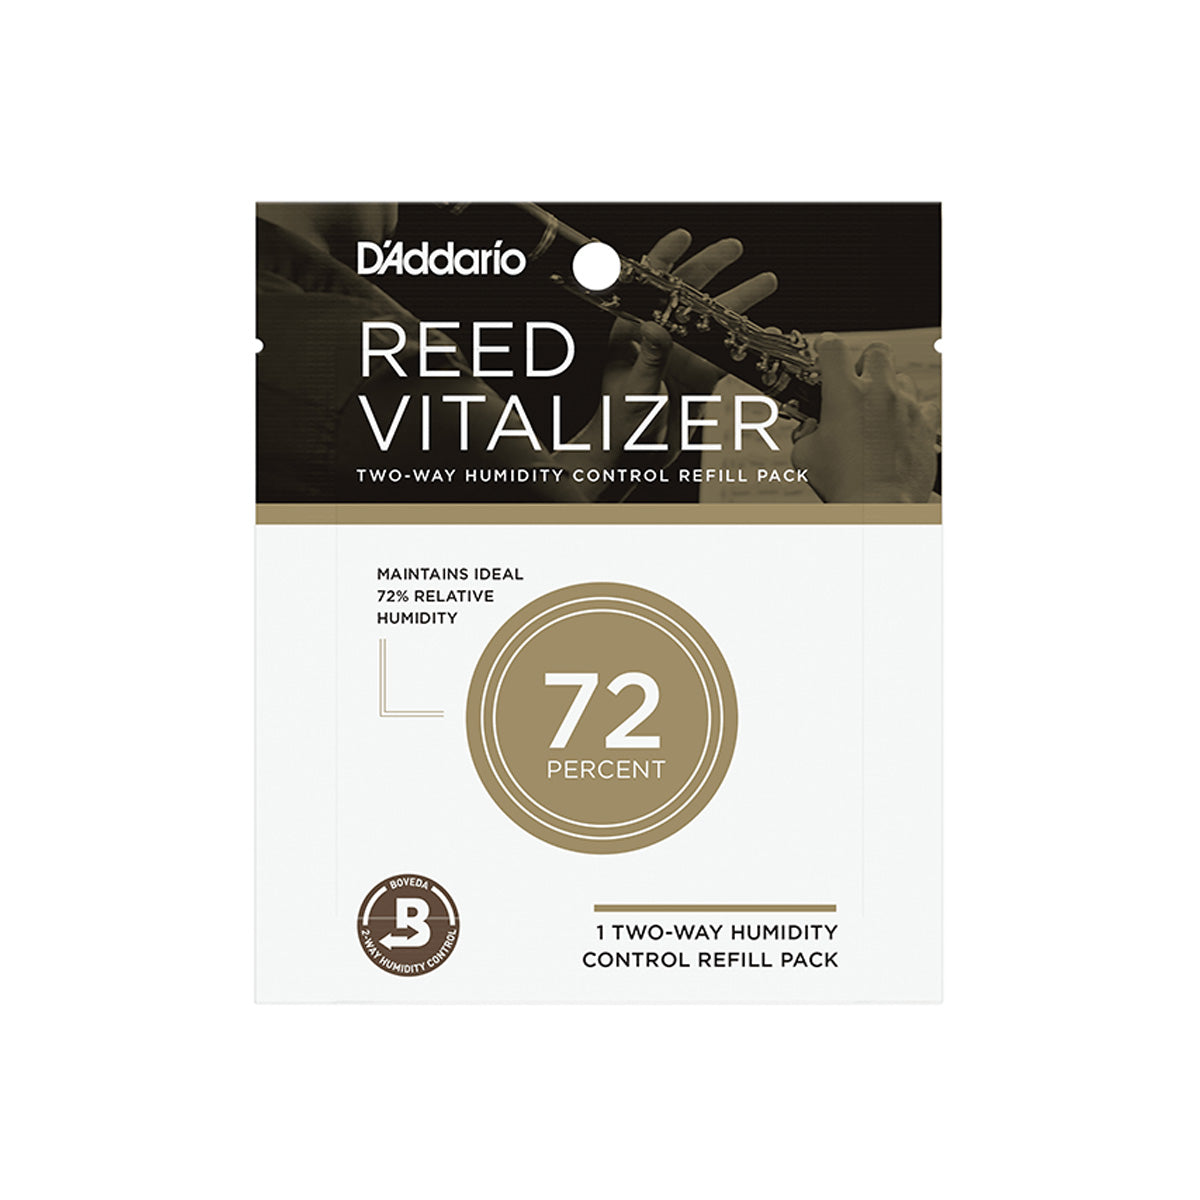 D'Addario RV0173 Reed Vitalizer